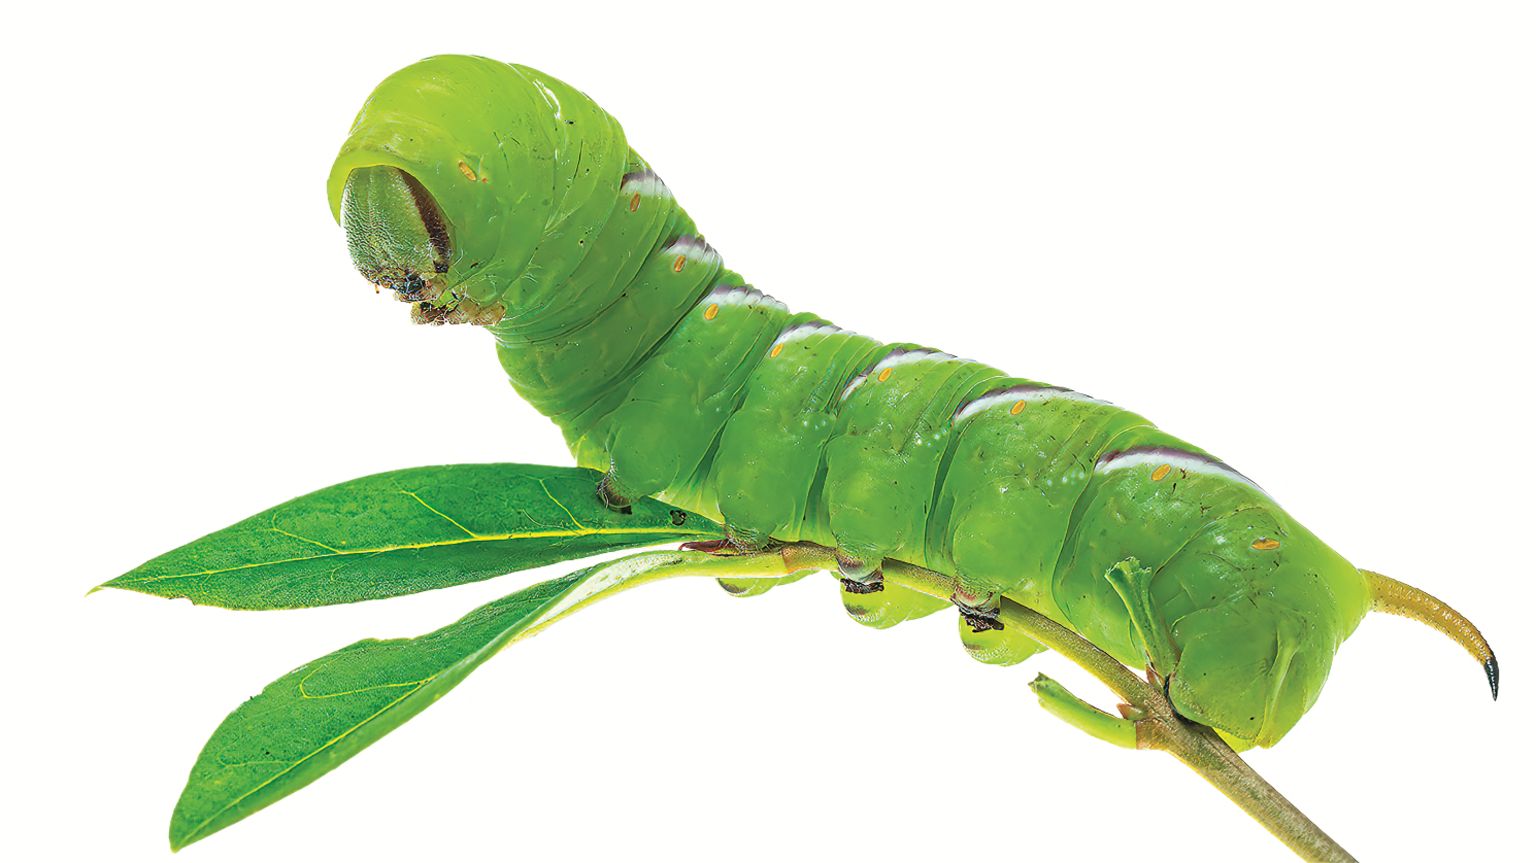 A photograph of a bright green caterpillar by Barry Wells